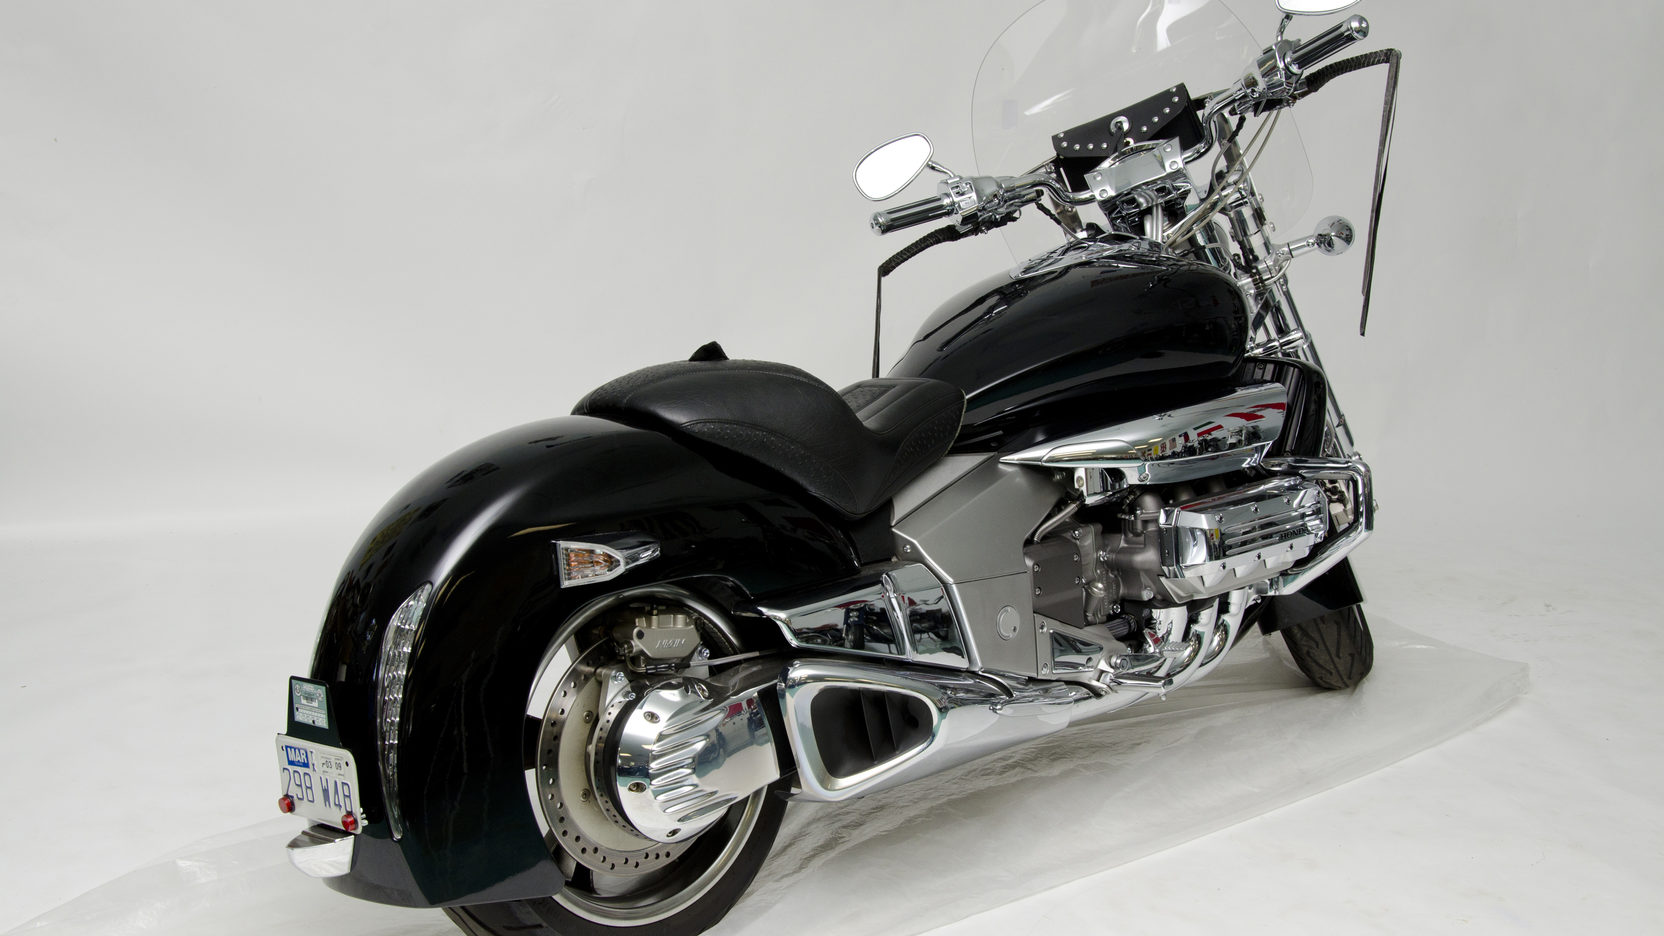 Мотоцикл valkyrie tourer 1996 (japan): технические характеристики, фото, видео